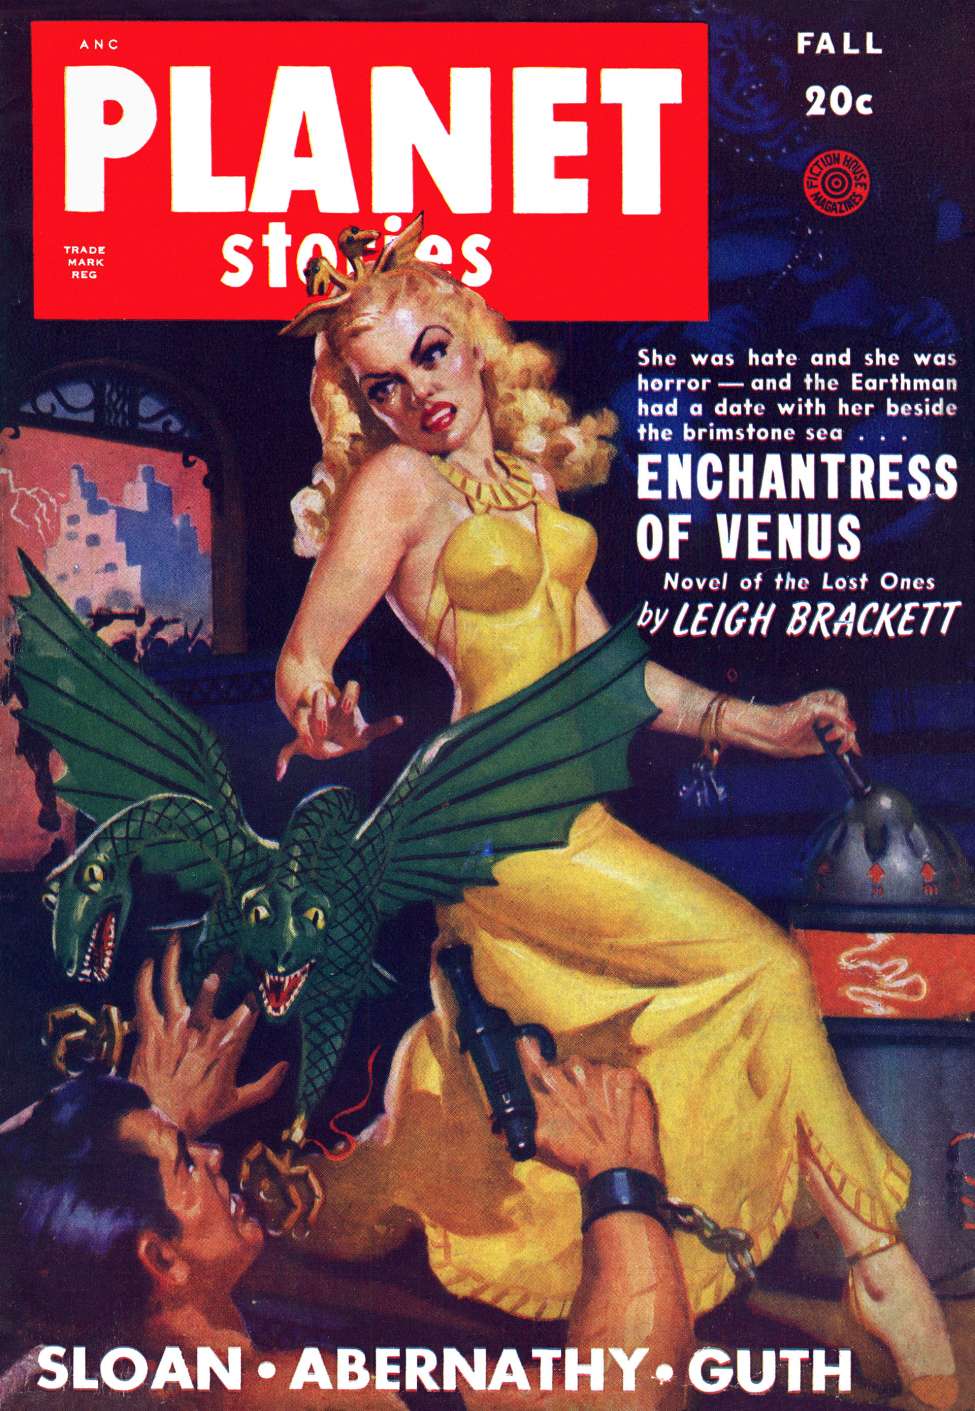 Book Cover For Planet Stories v4 4 - Enchantress of Venus - Leigh Brackett